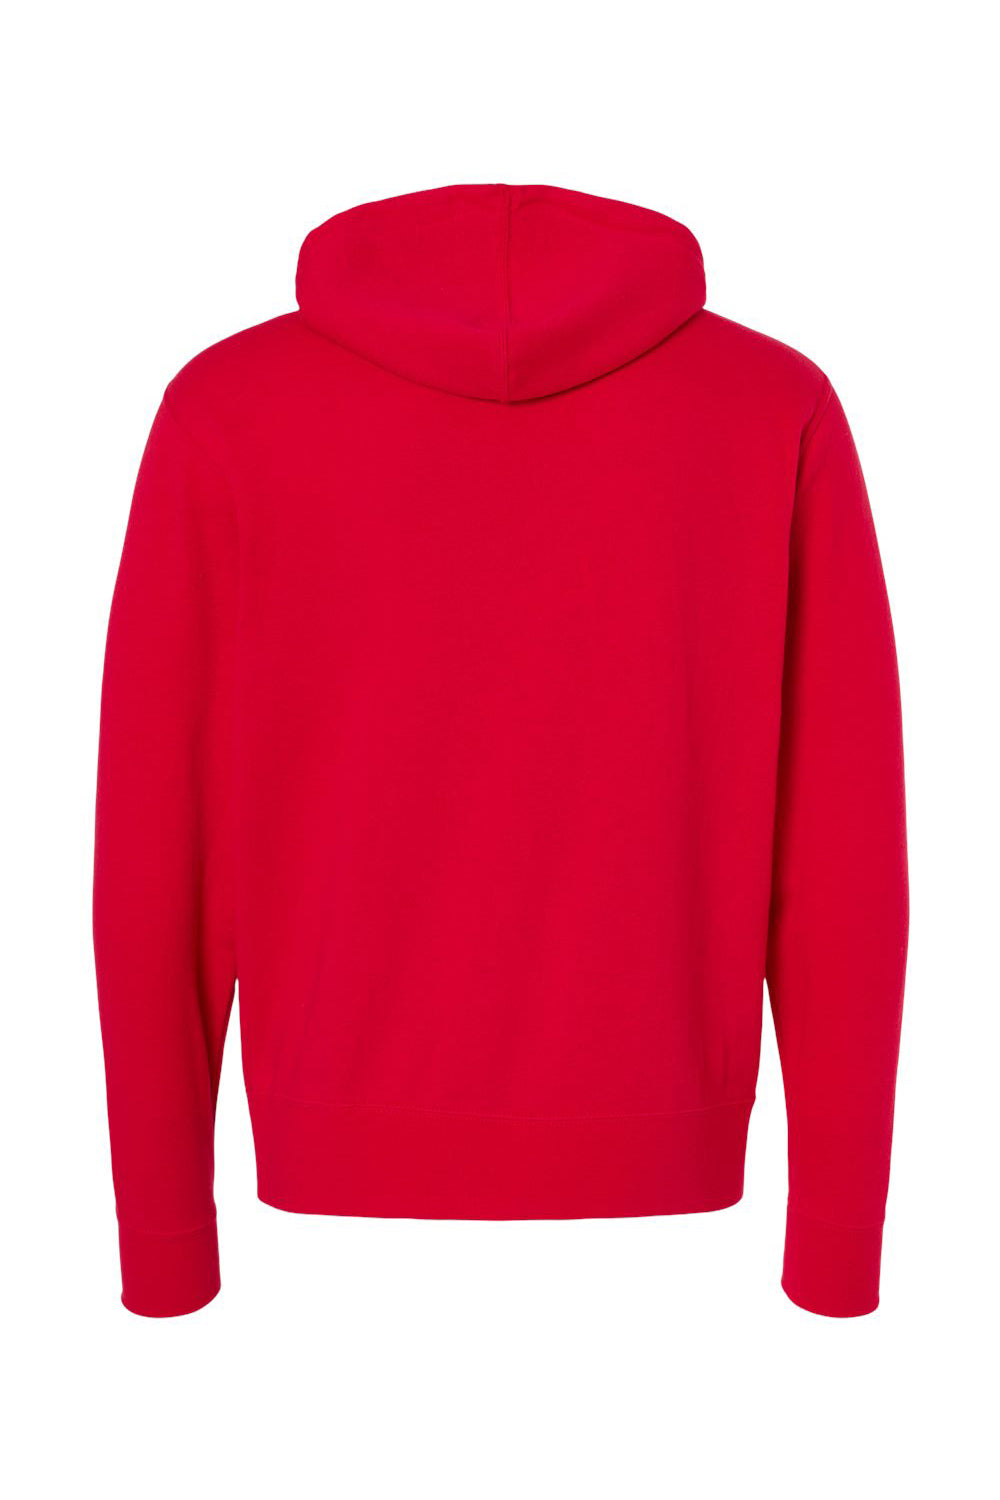 Independent Trading Co. AFX90UNZ Mens Full Zip Hooded Sweatshirt Hoodie Red Flat Back